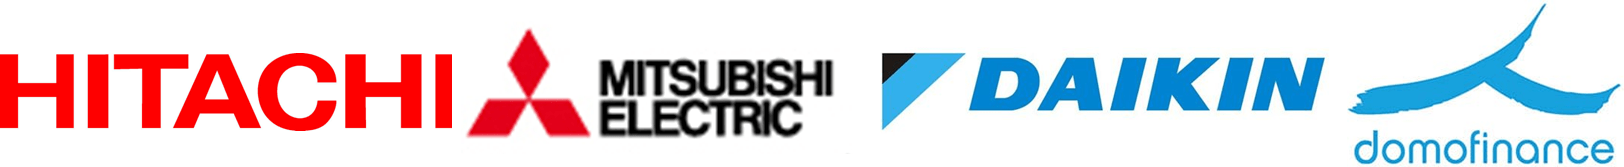 Logos-Hitachi-Mitsubishi-Daikin-Domofinance- Partenaires-ADL-Services